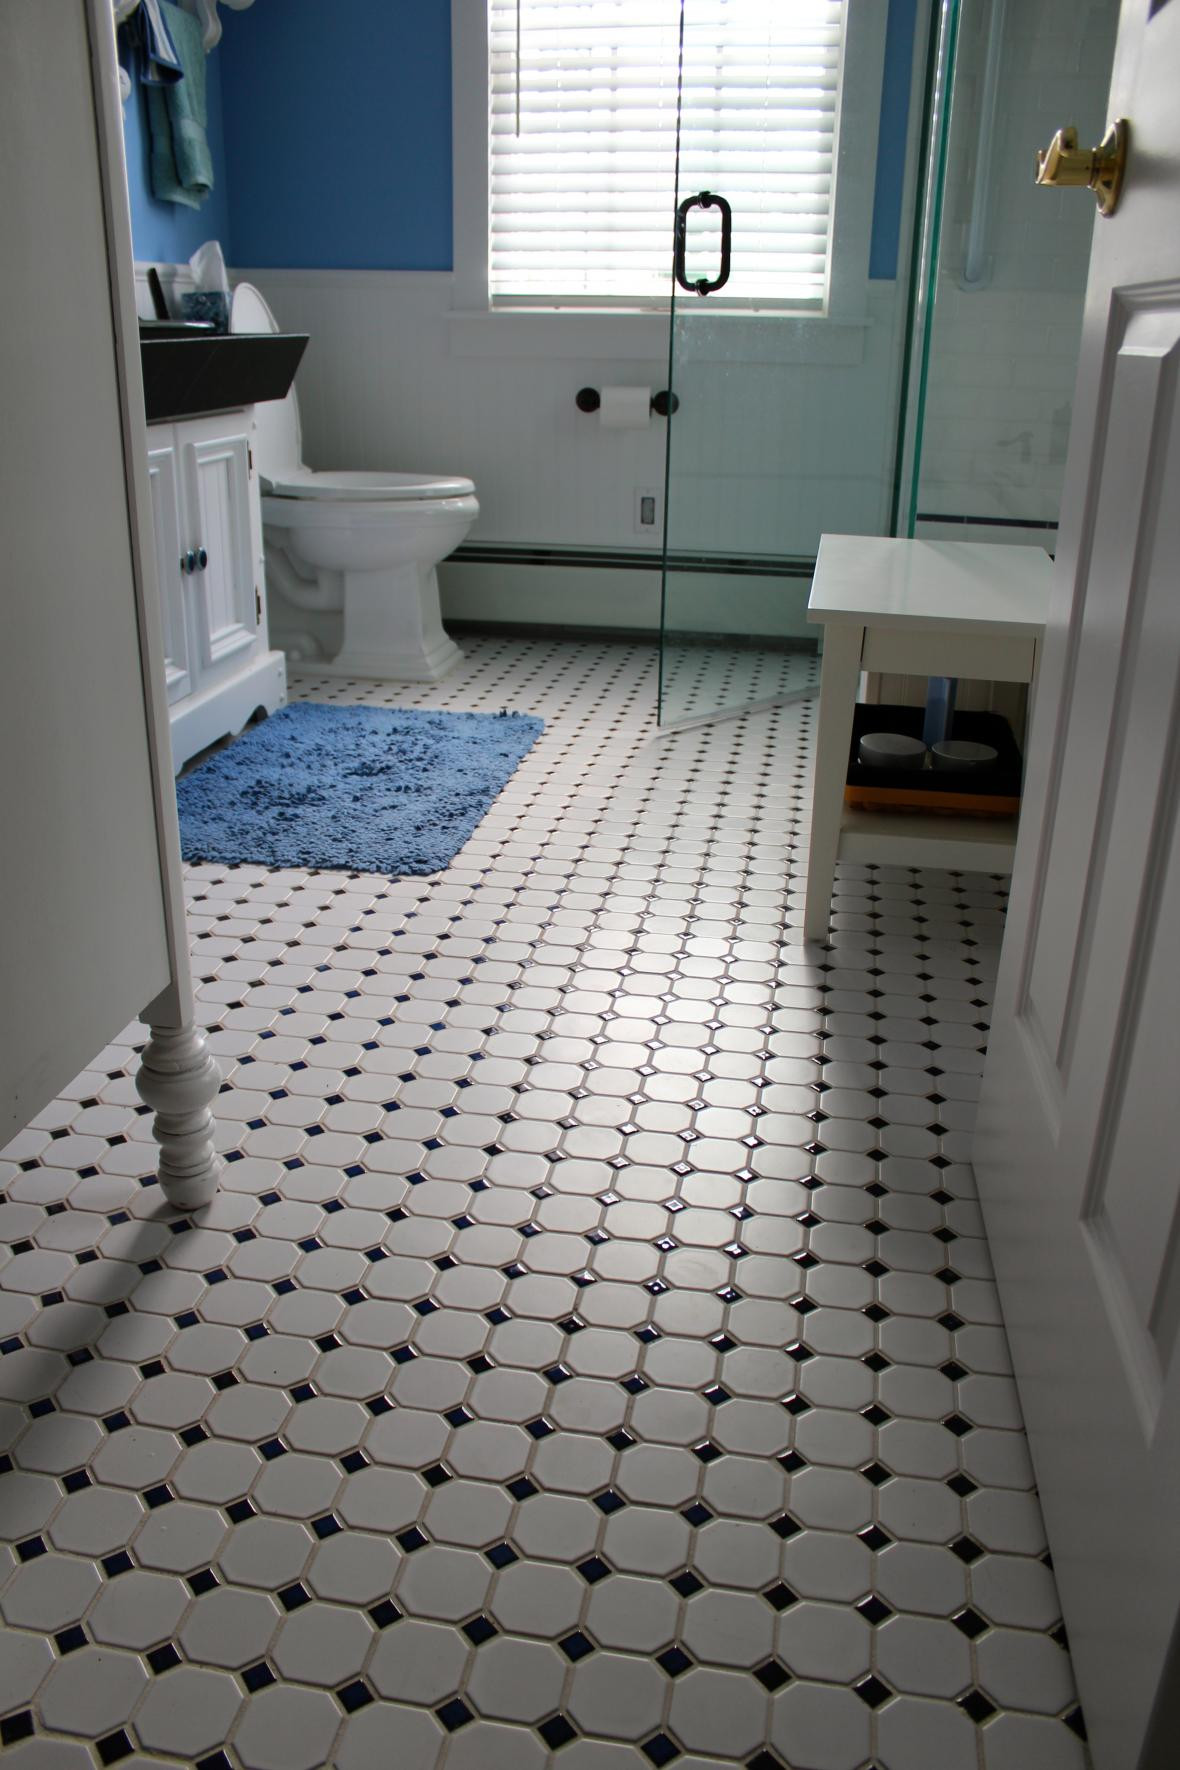 Vintage Bathroom Floor Tile
 Vintage tile bathroom floor